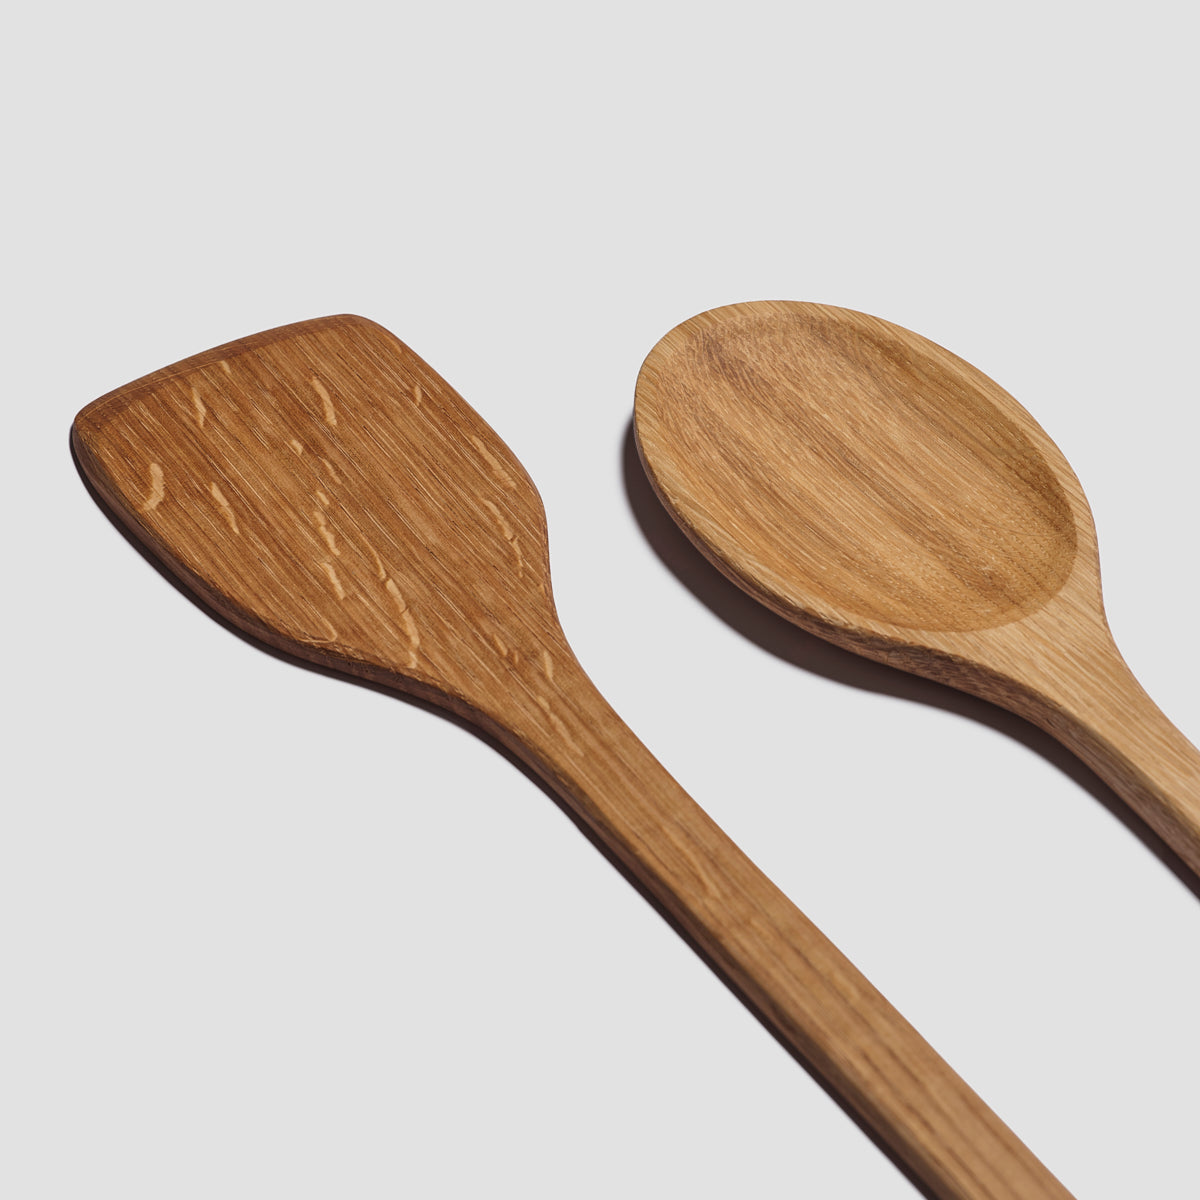 Oak Spatula and Spoon Detail